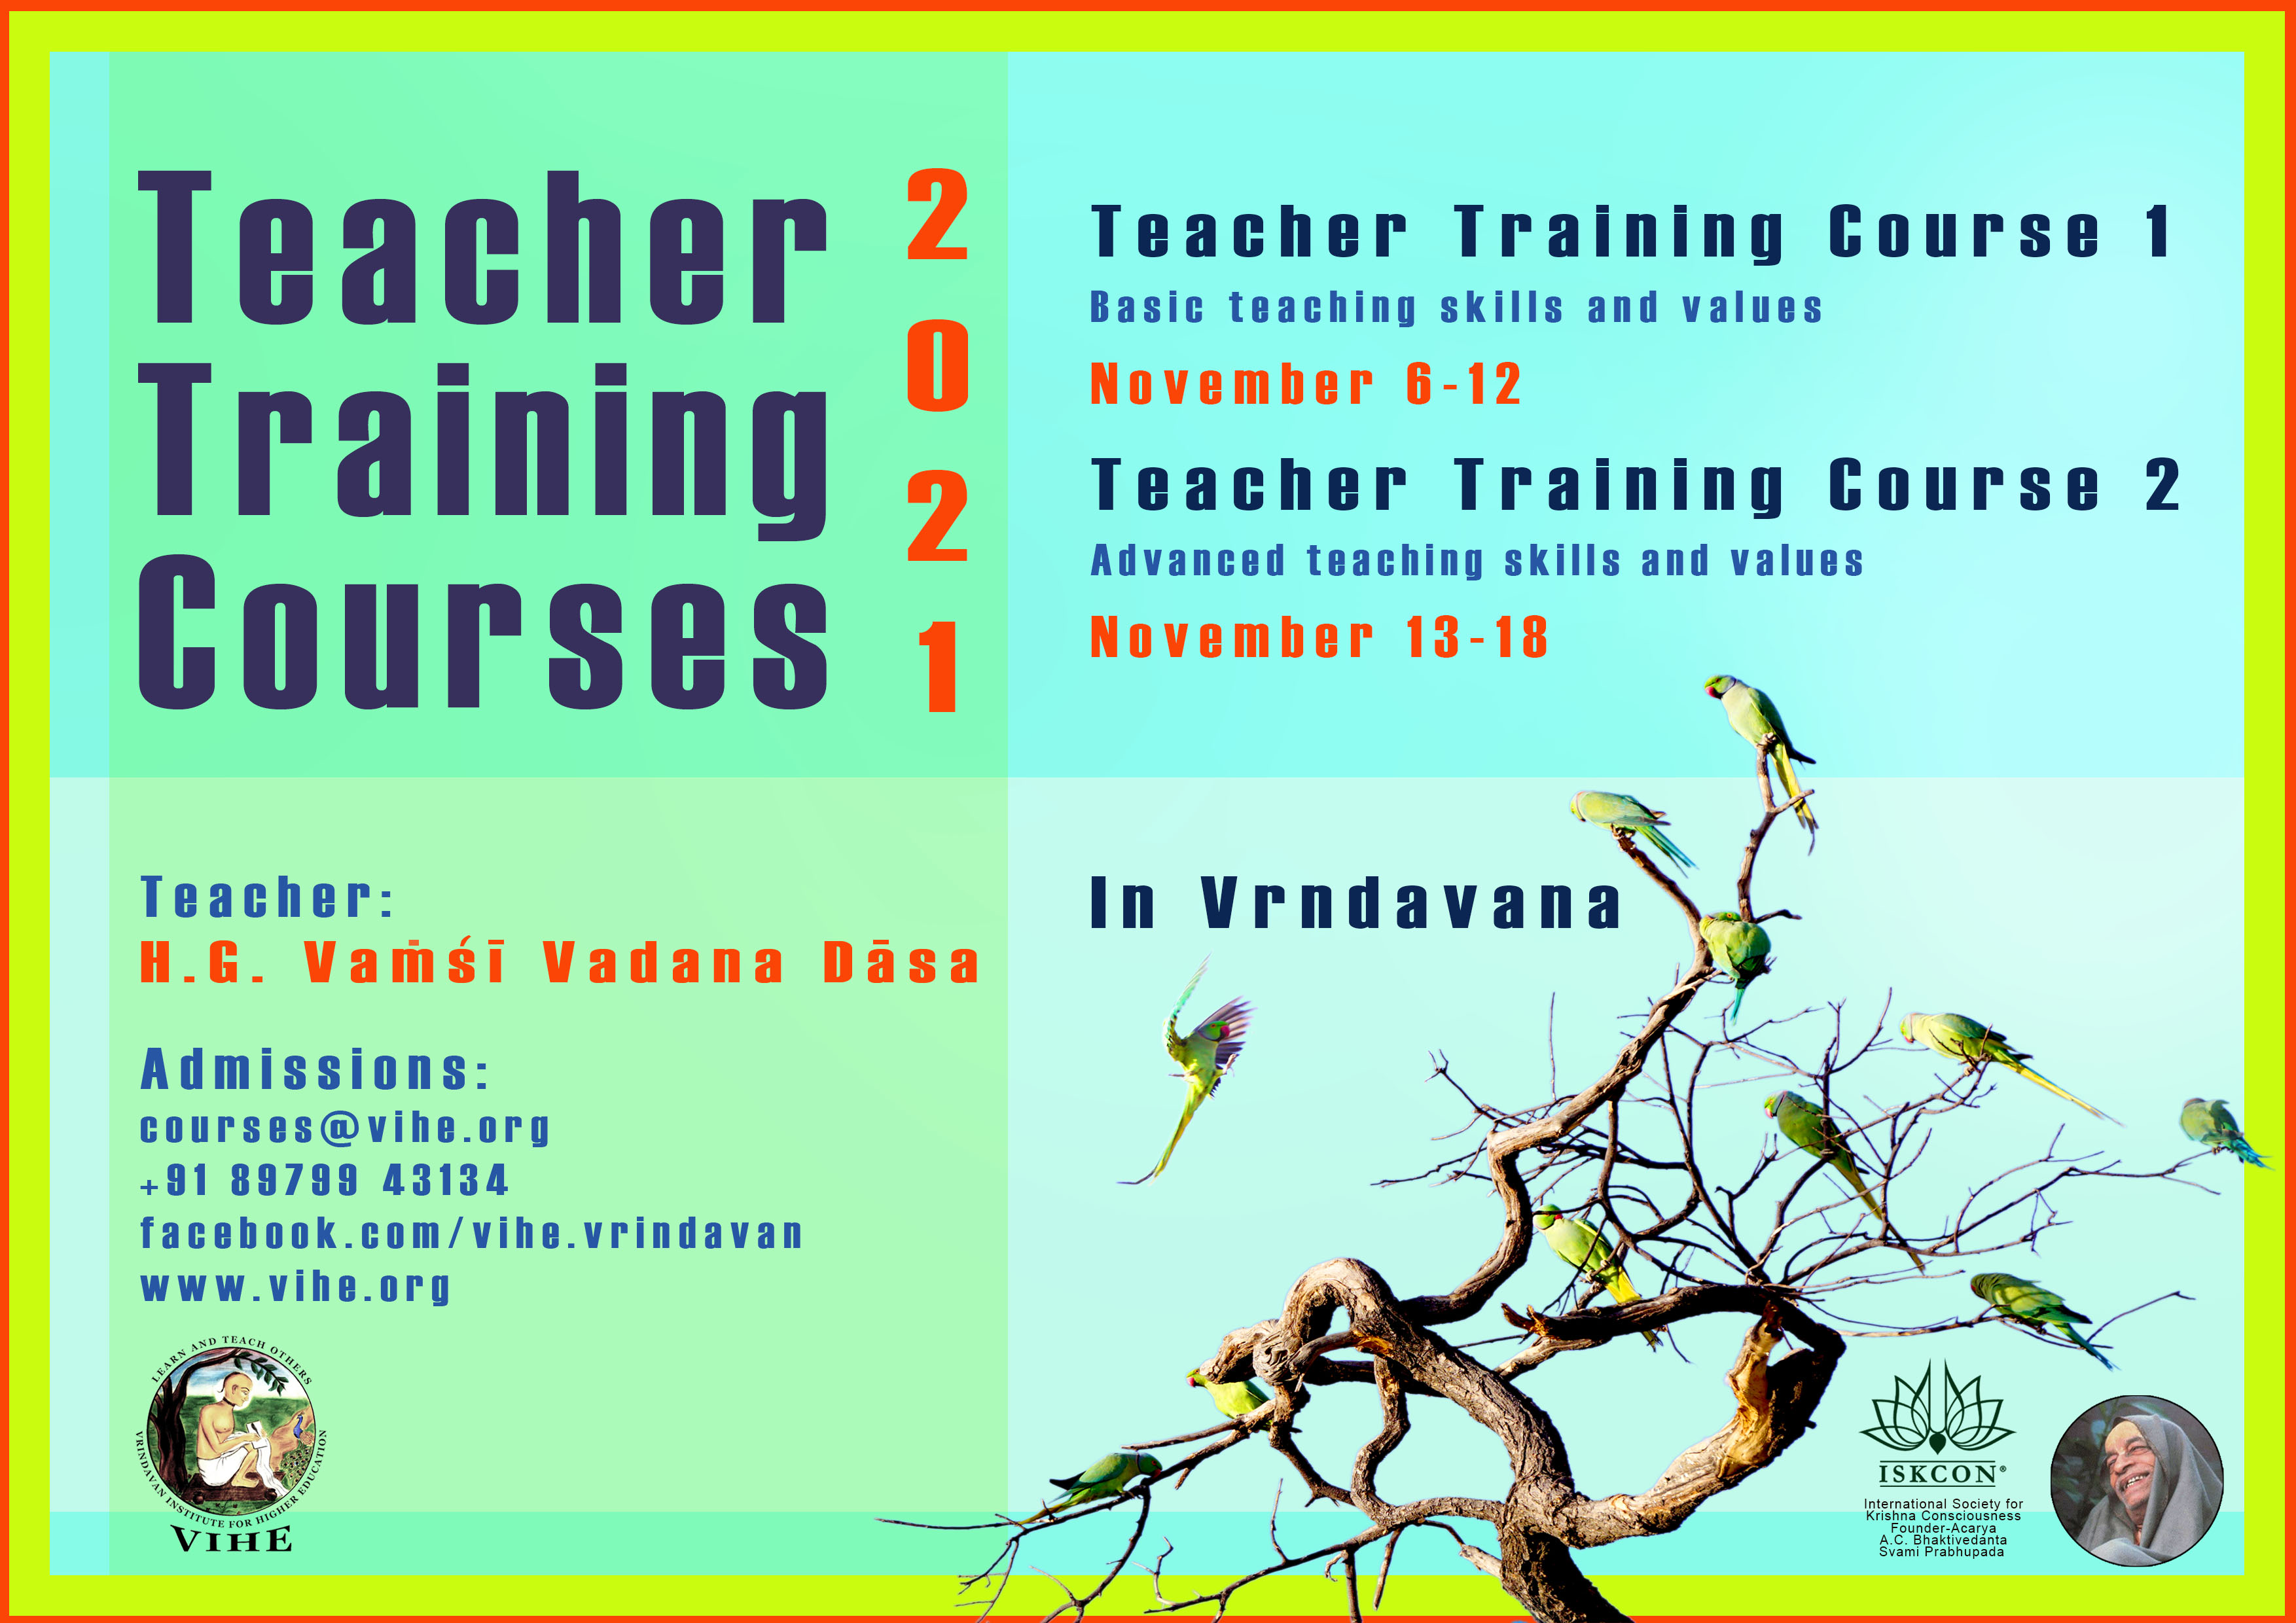 Teacher Training Course 2